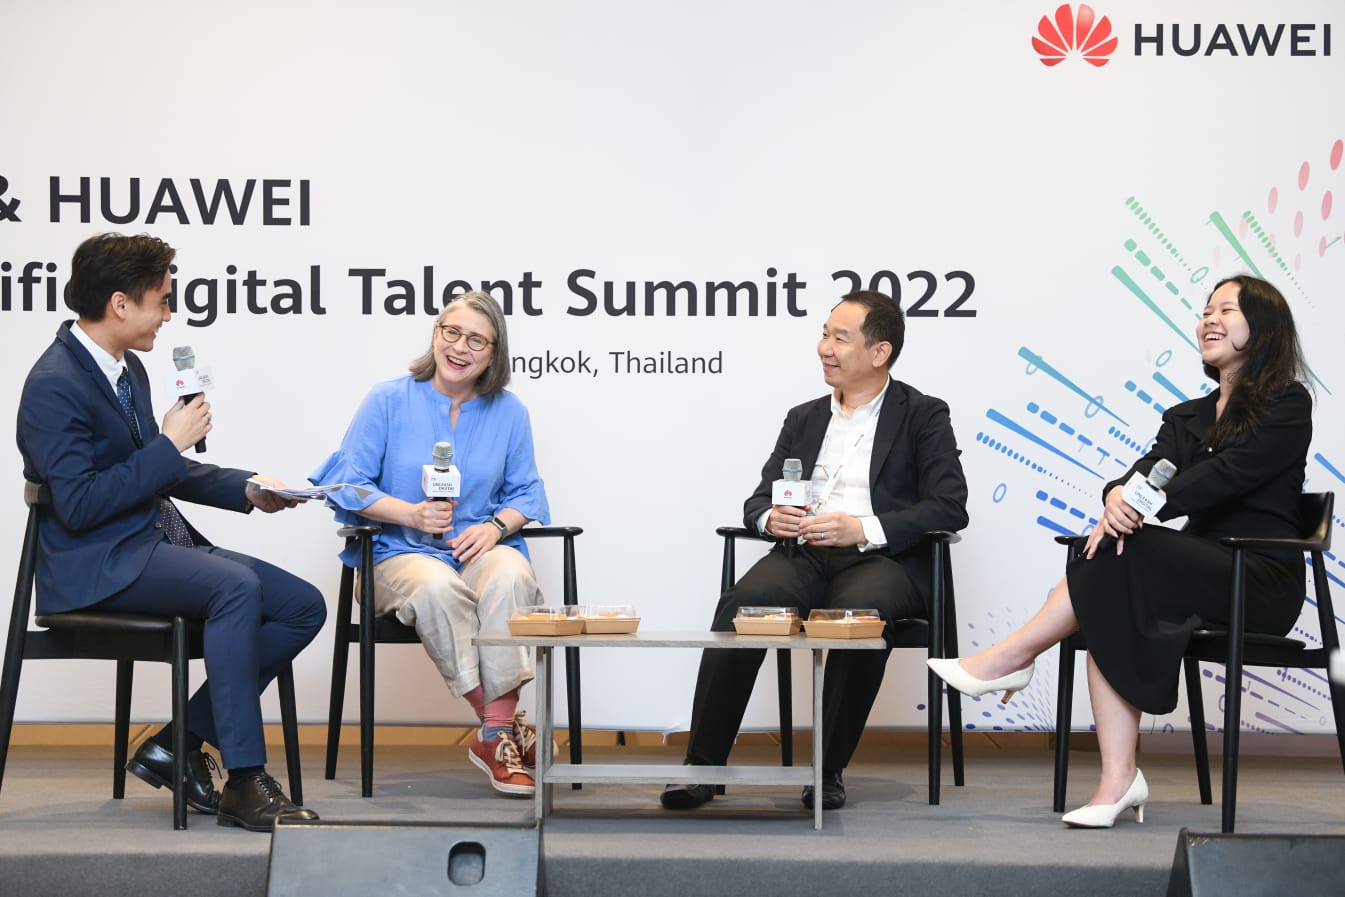 Asia Pacific Digital Talent Summit oleh Huawei bersama ASEAN Foundation